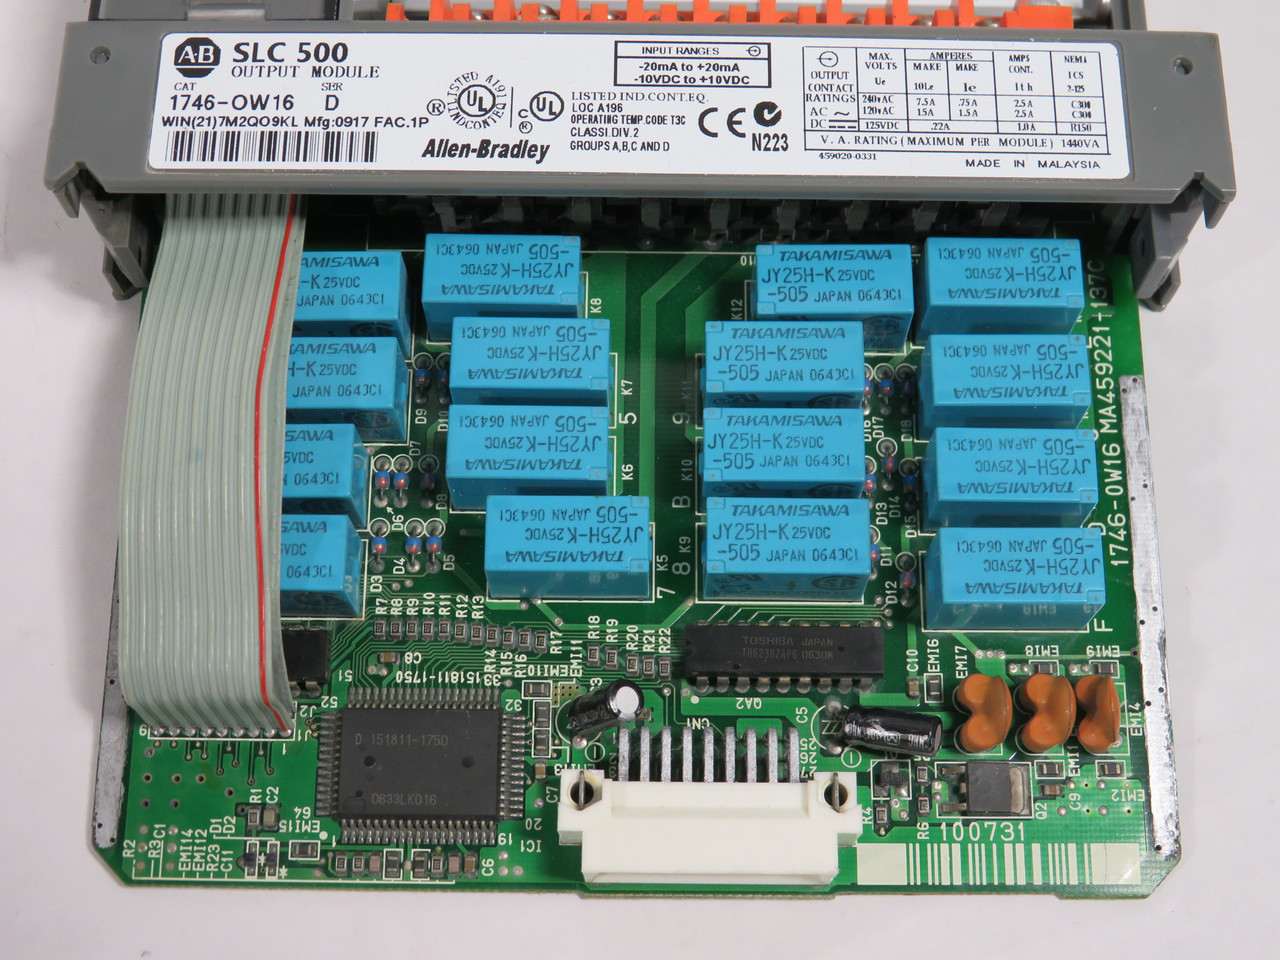 Allen-Bradley 1746-OW16 Series D Digital Output Module 125VDC Output USED